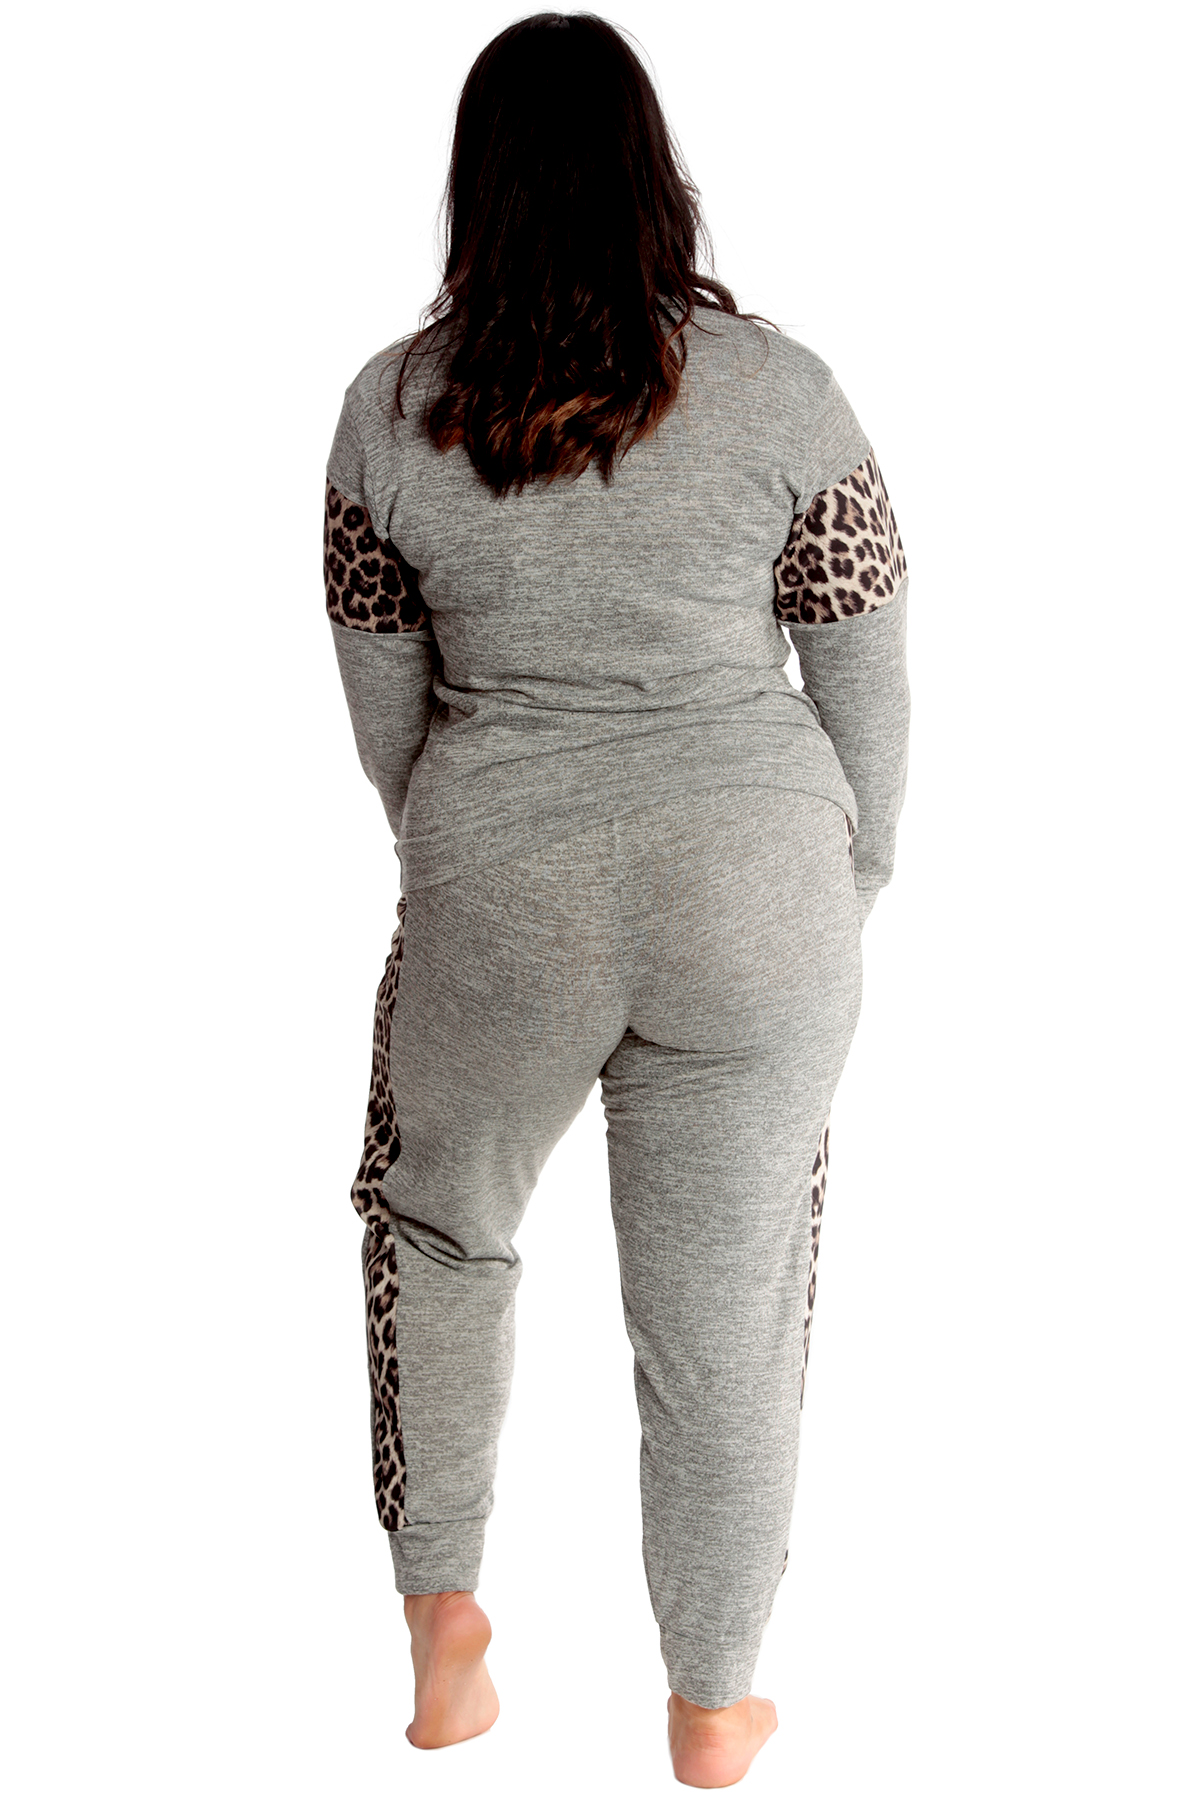 New Womens Plus Size Tracksuit Ladies Animal Leopard Print ...